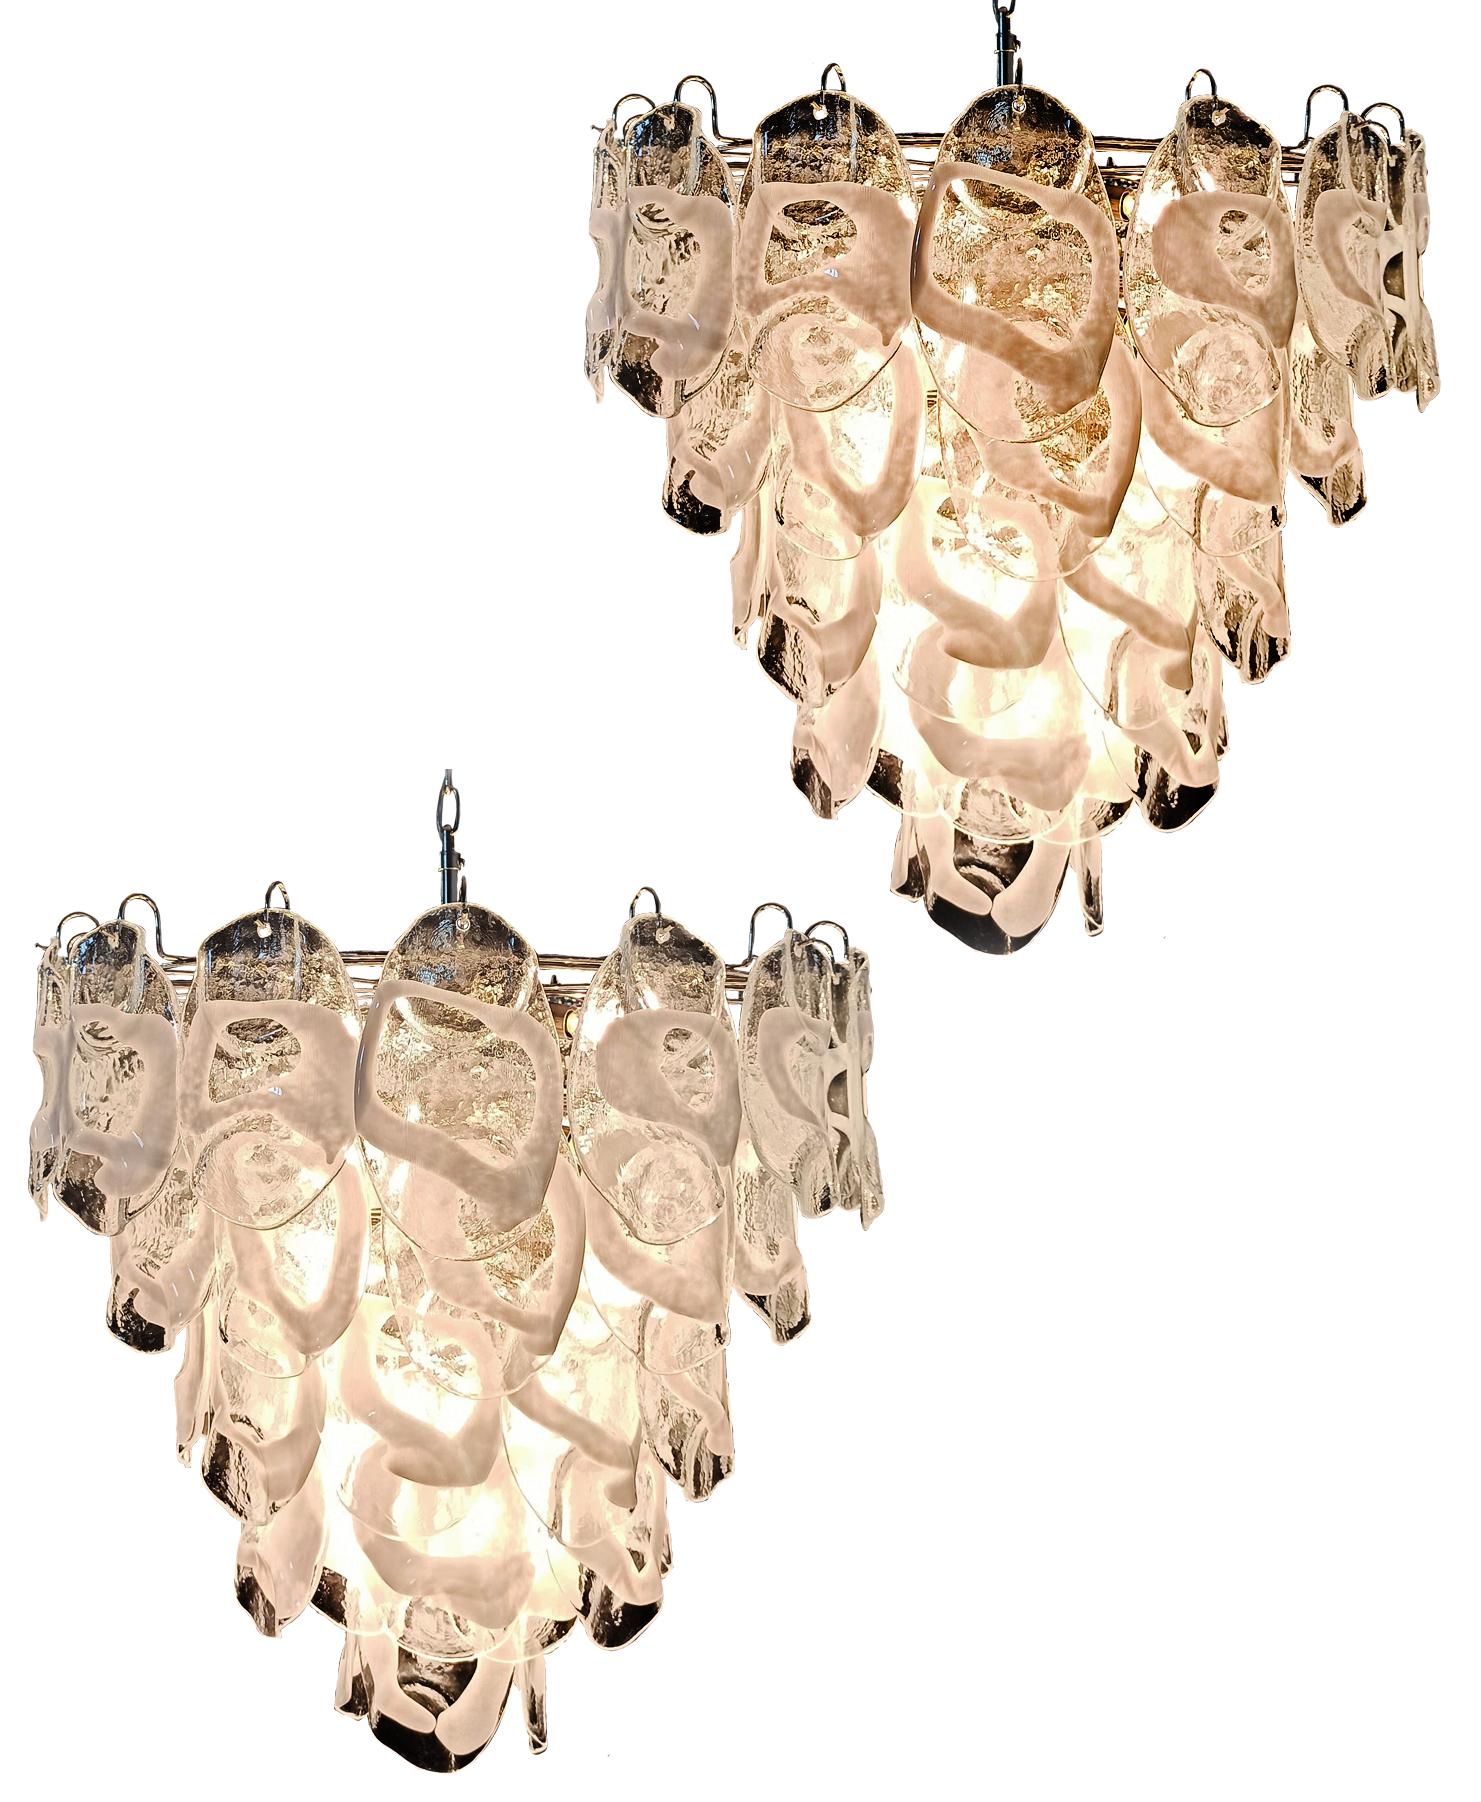 Amazing Huge Vintage Italian Murano chandelier lamp by Vistosi - 57 glasses For Sale 11